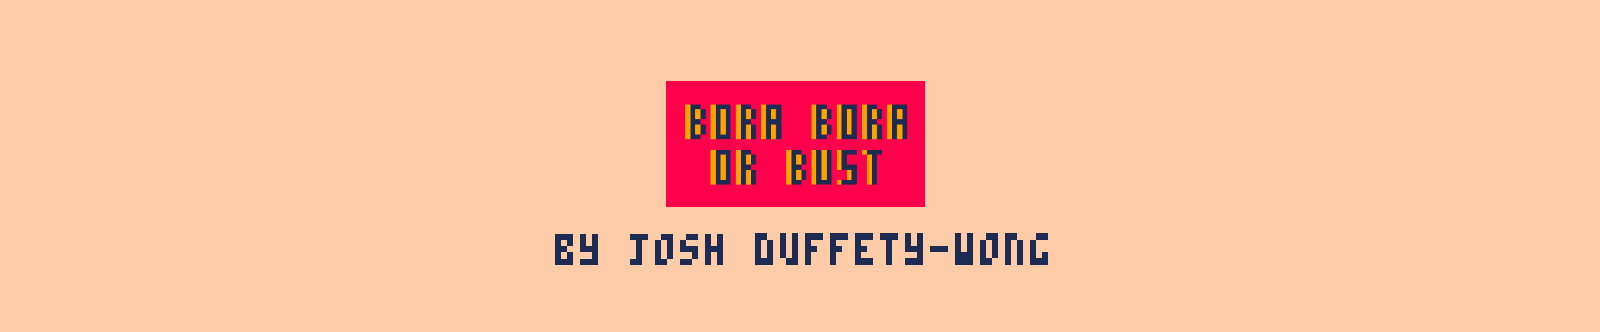 Bora Bora or Bust